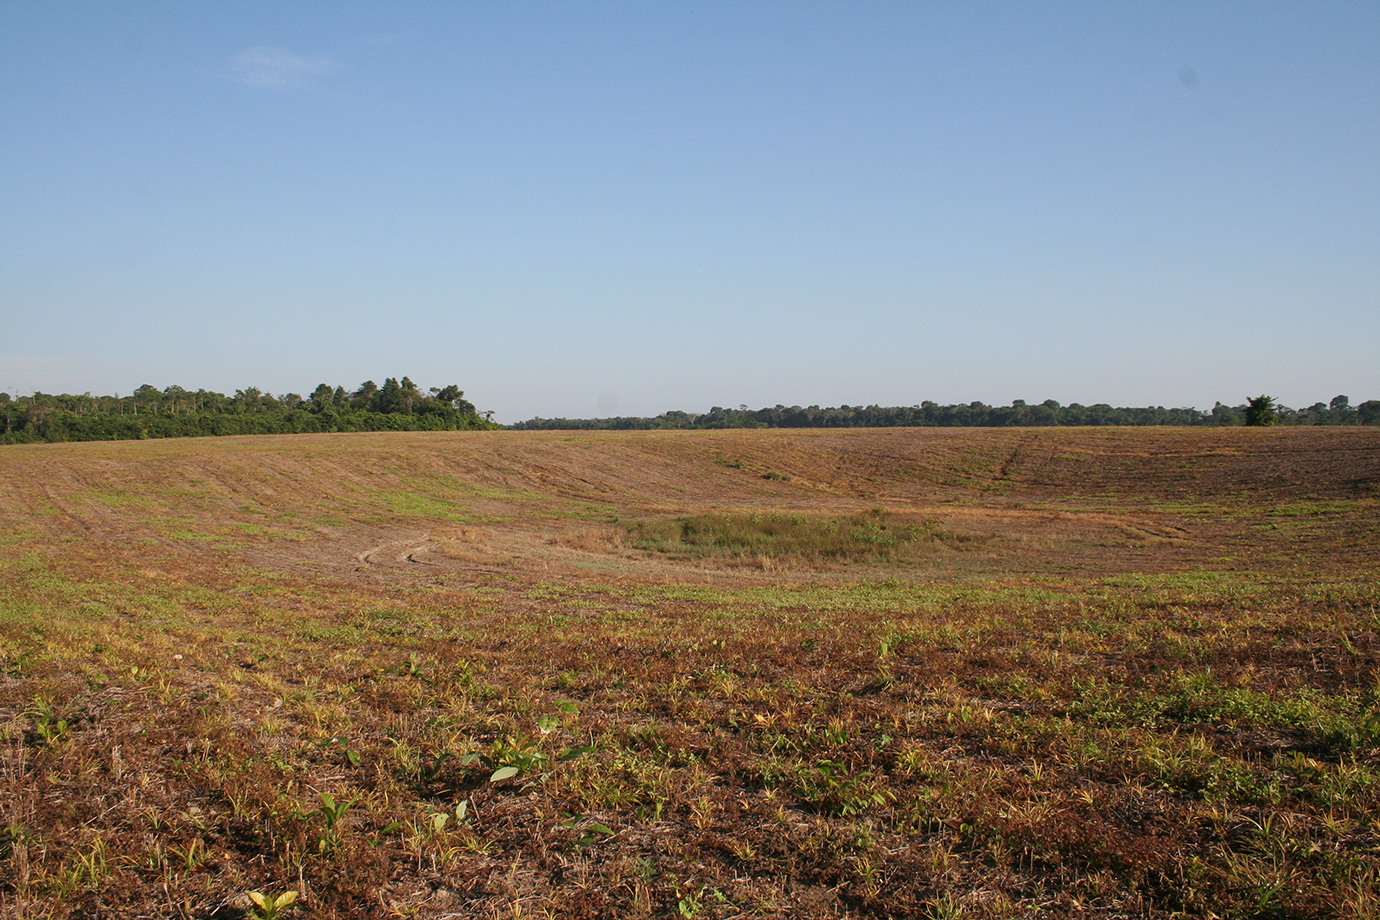 Large depression visible in contemporary farmland. Location: Ramal do Funil. Photo: Per Stenborg.